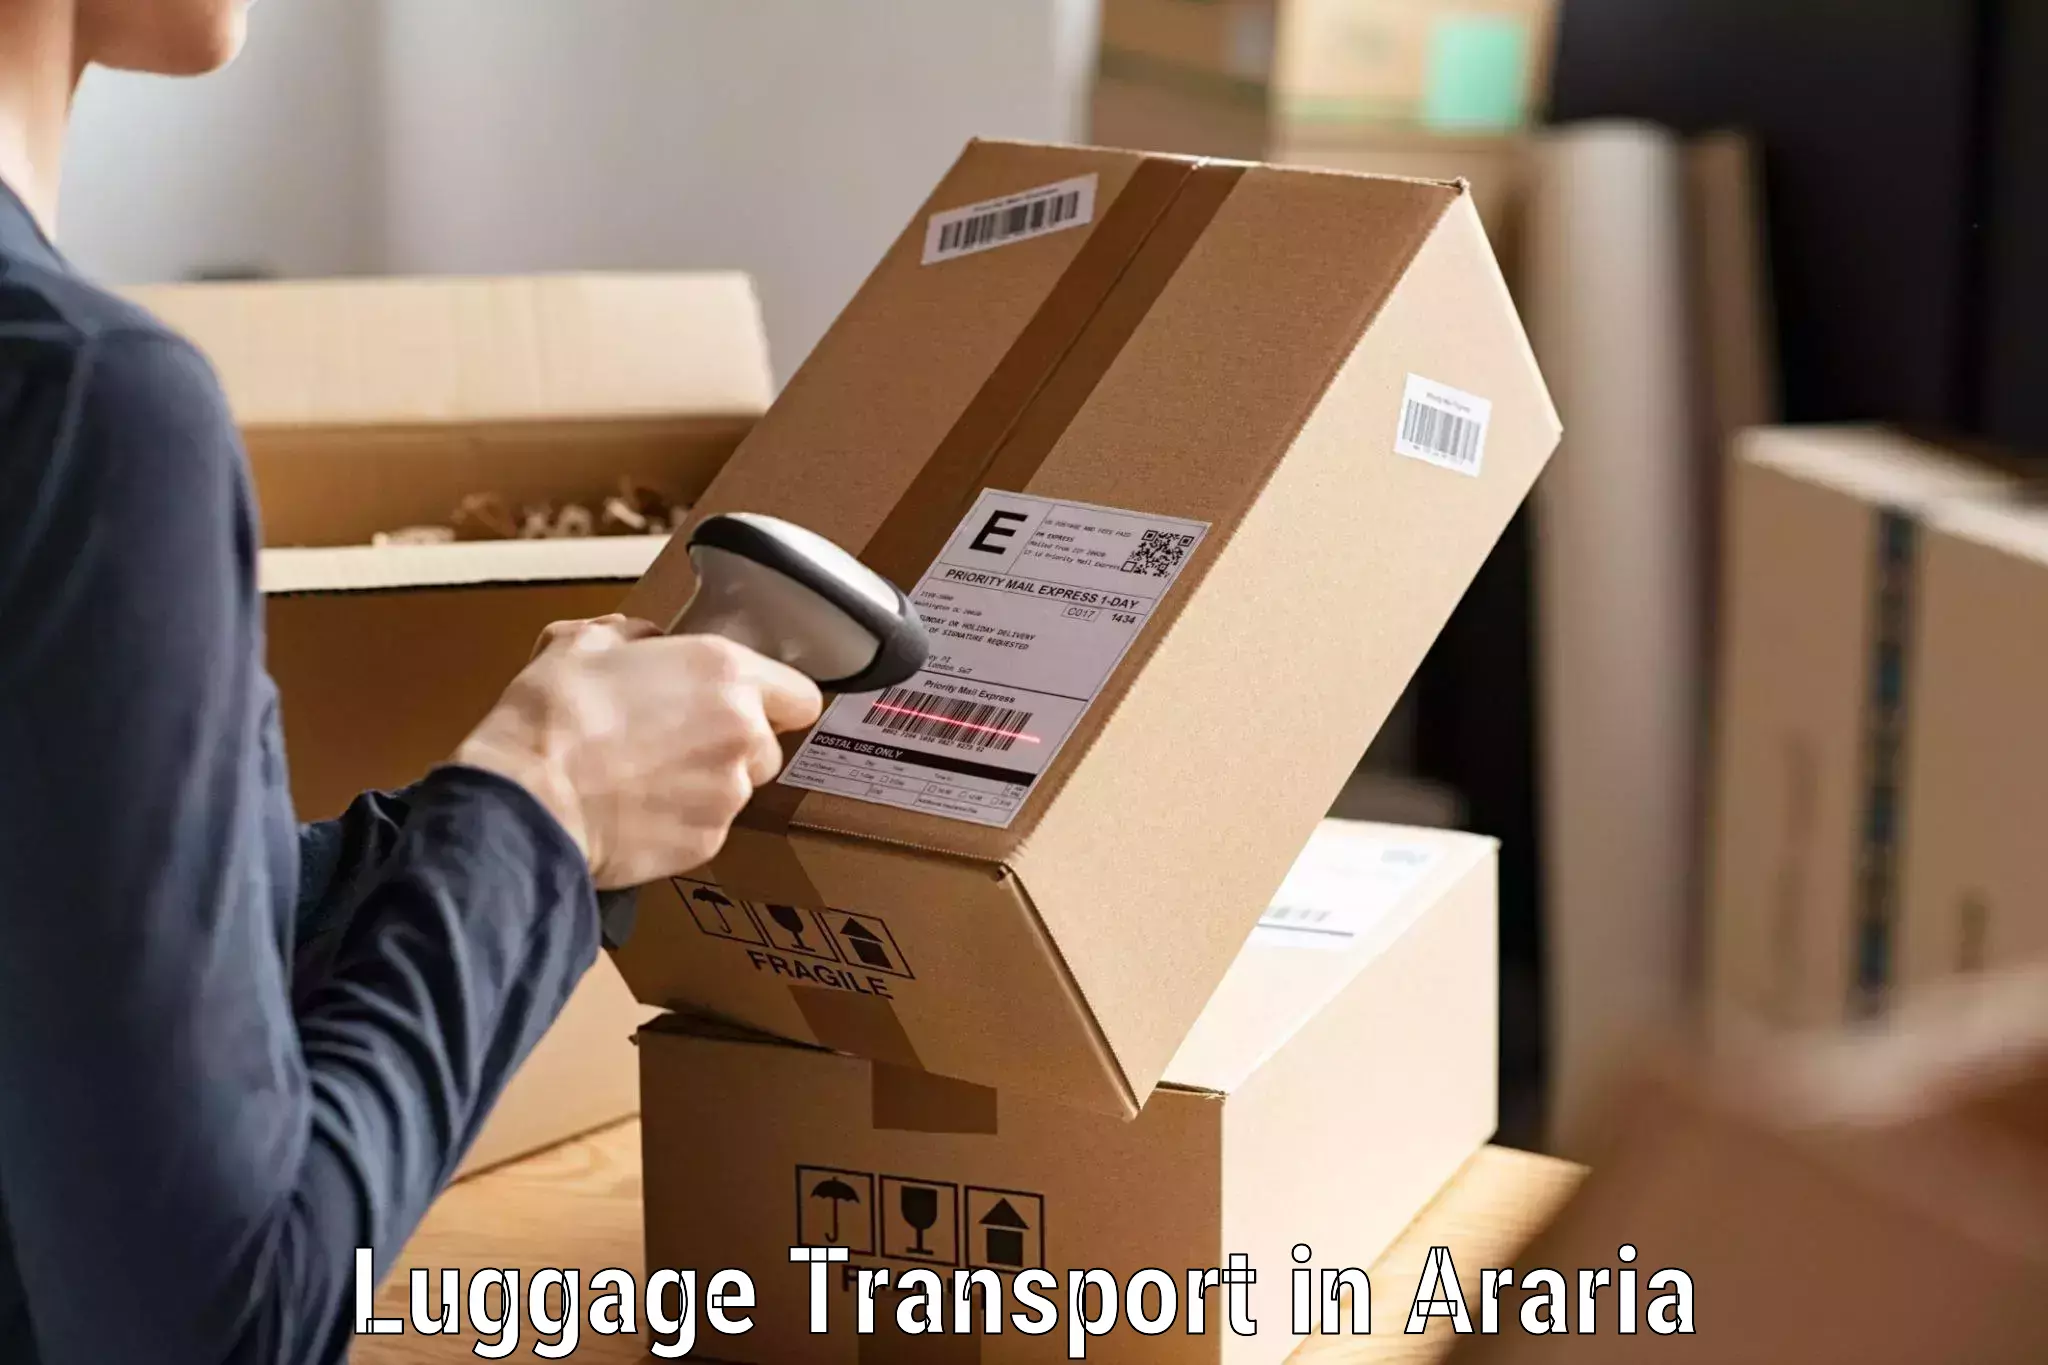 Multi-destination luggage transport in Araria